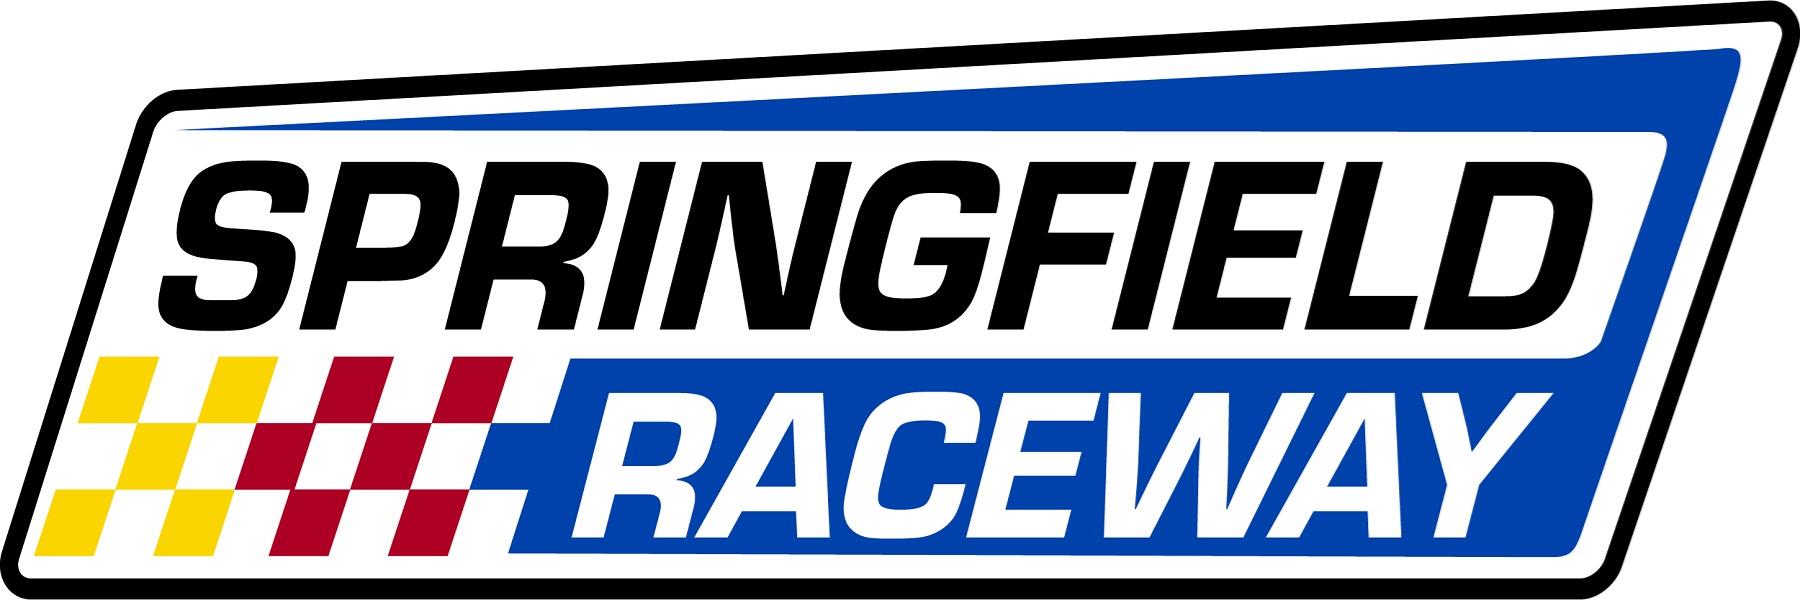 11/6/2021 - Springfield Raceway